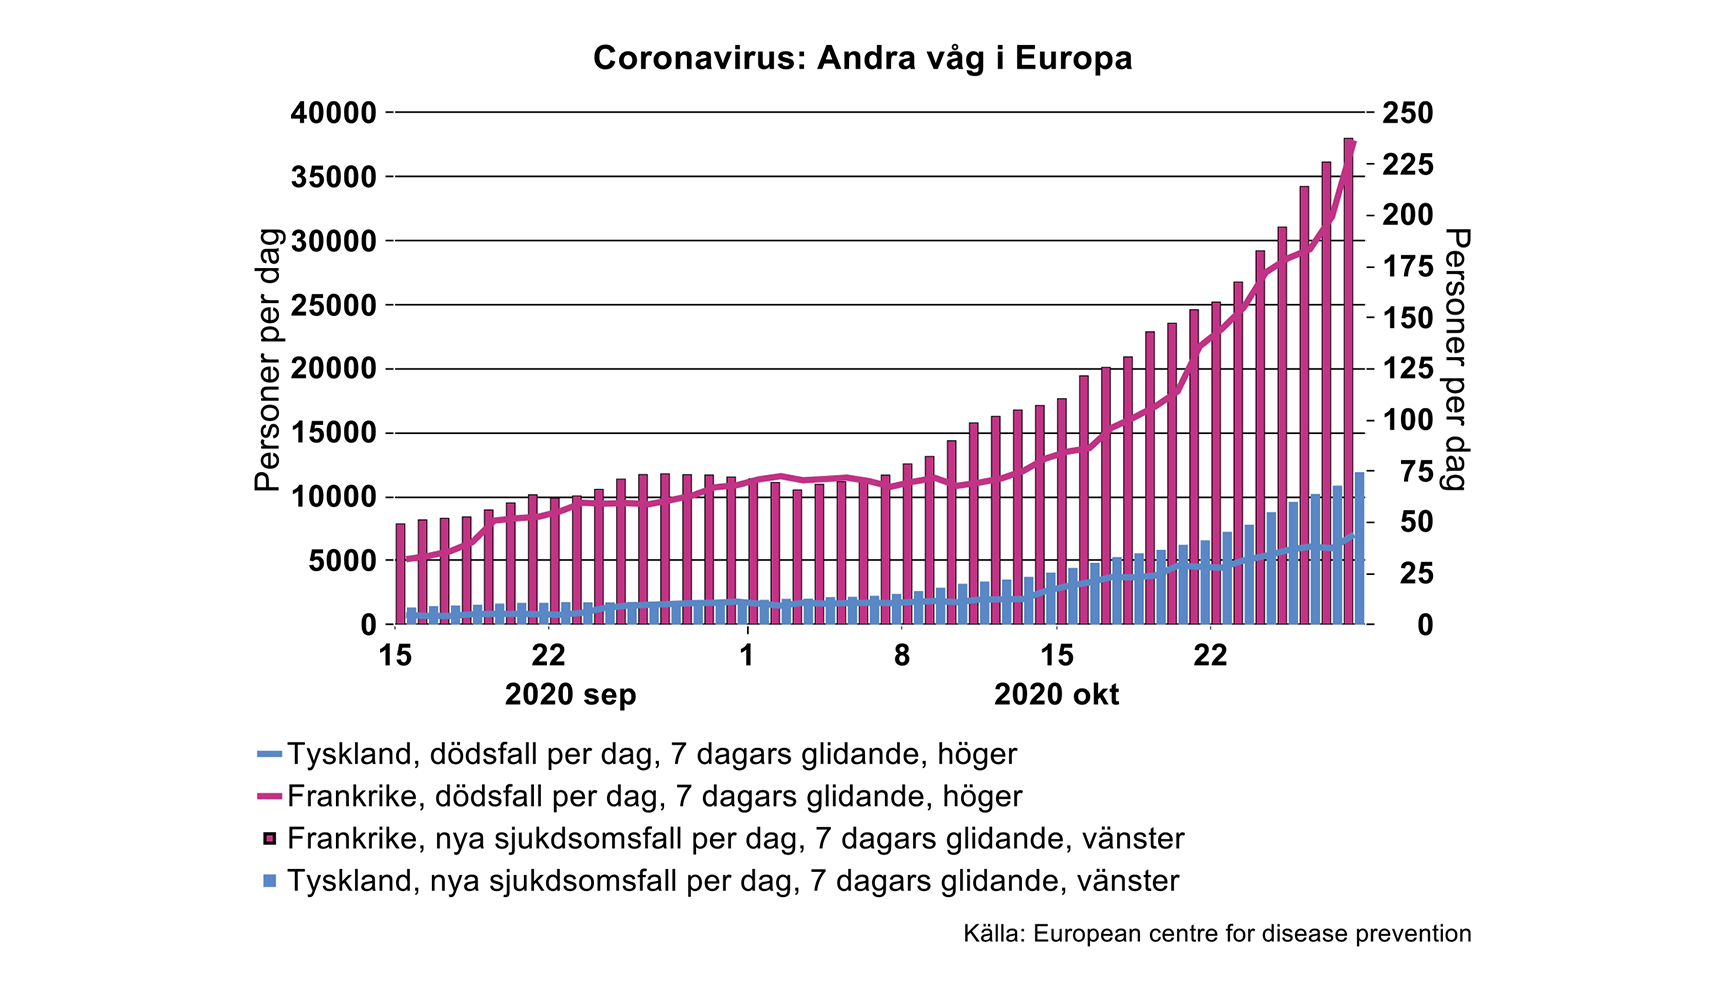 coronavirus-andra-vag-i-europa-graf.png